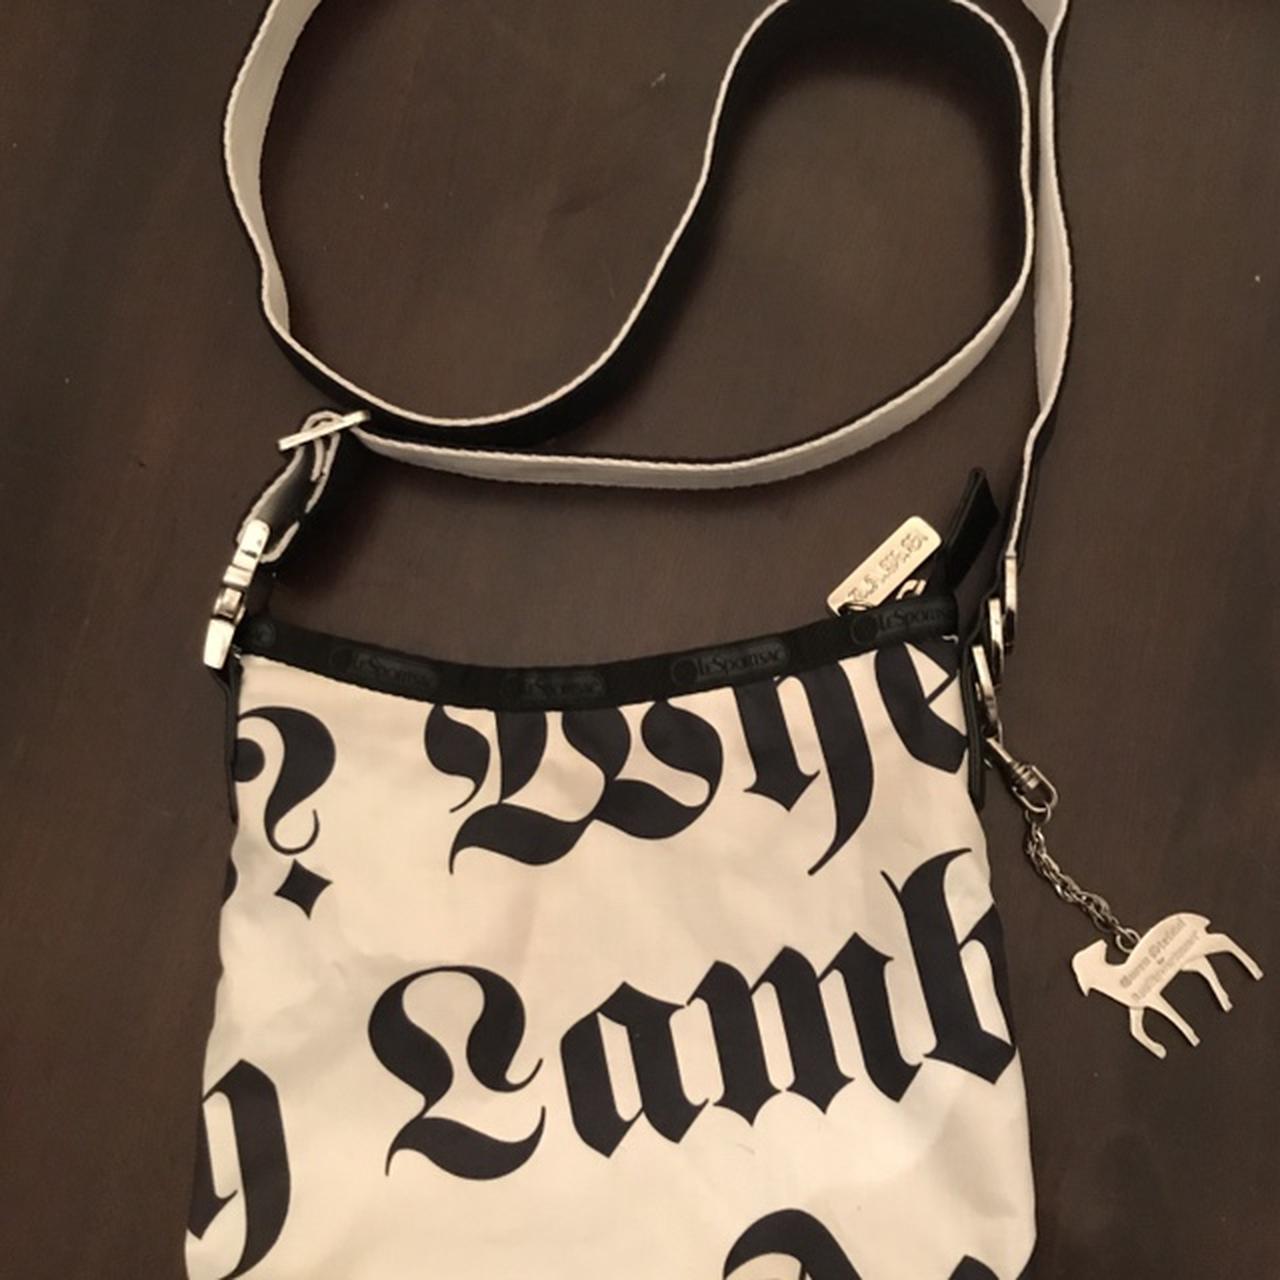 Harajuku Girls Bag Shoulder Purse Cali Girls Print Gwen Stefani | eBay